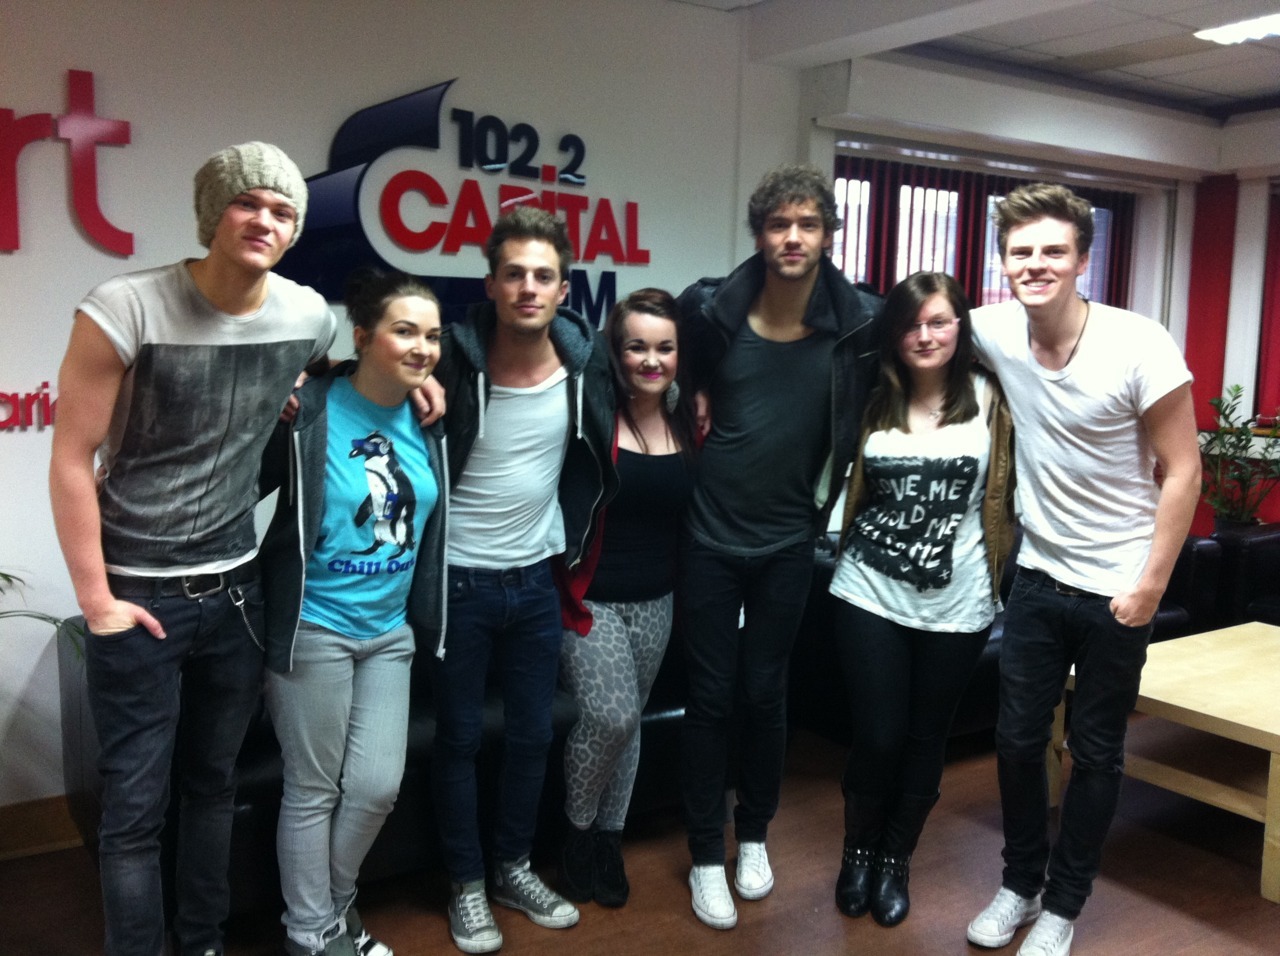 Lawson - When She Was Mine Radio Tour. 27th April 2012.Capital FM Birmingham.This